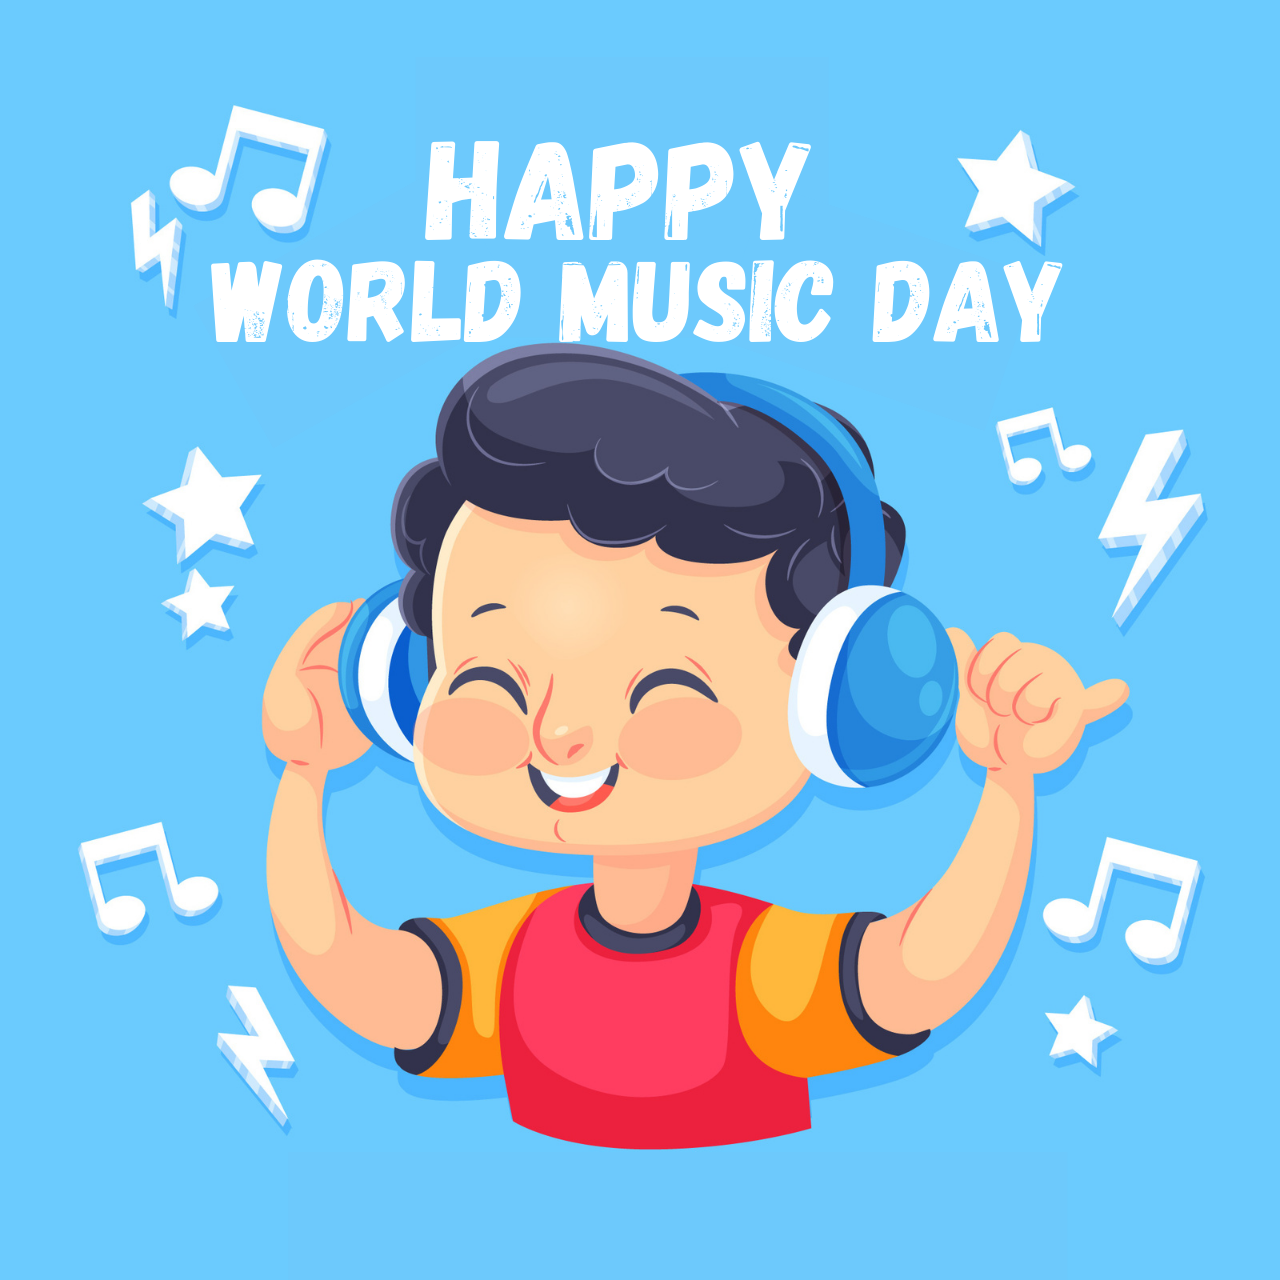 World Music Day 2021: WhatsApp Status Video Download for Fête de la Musique